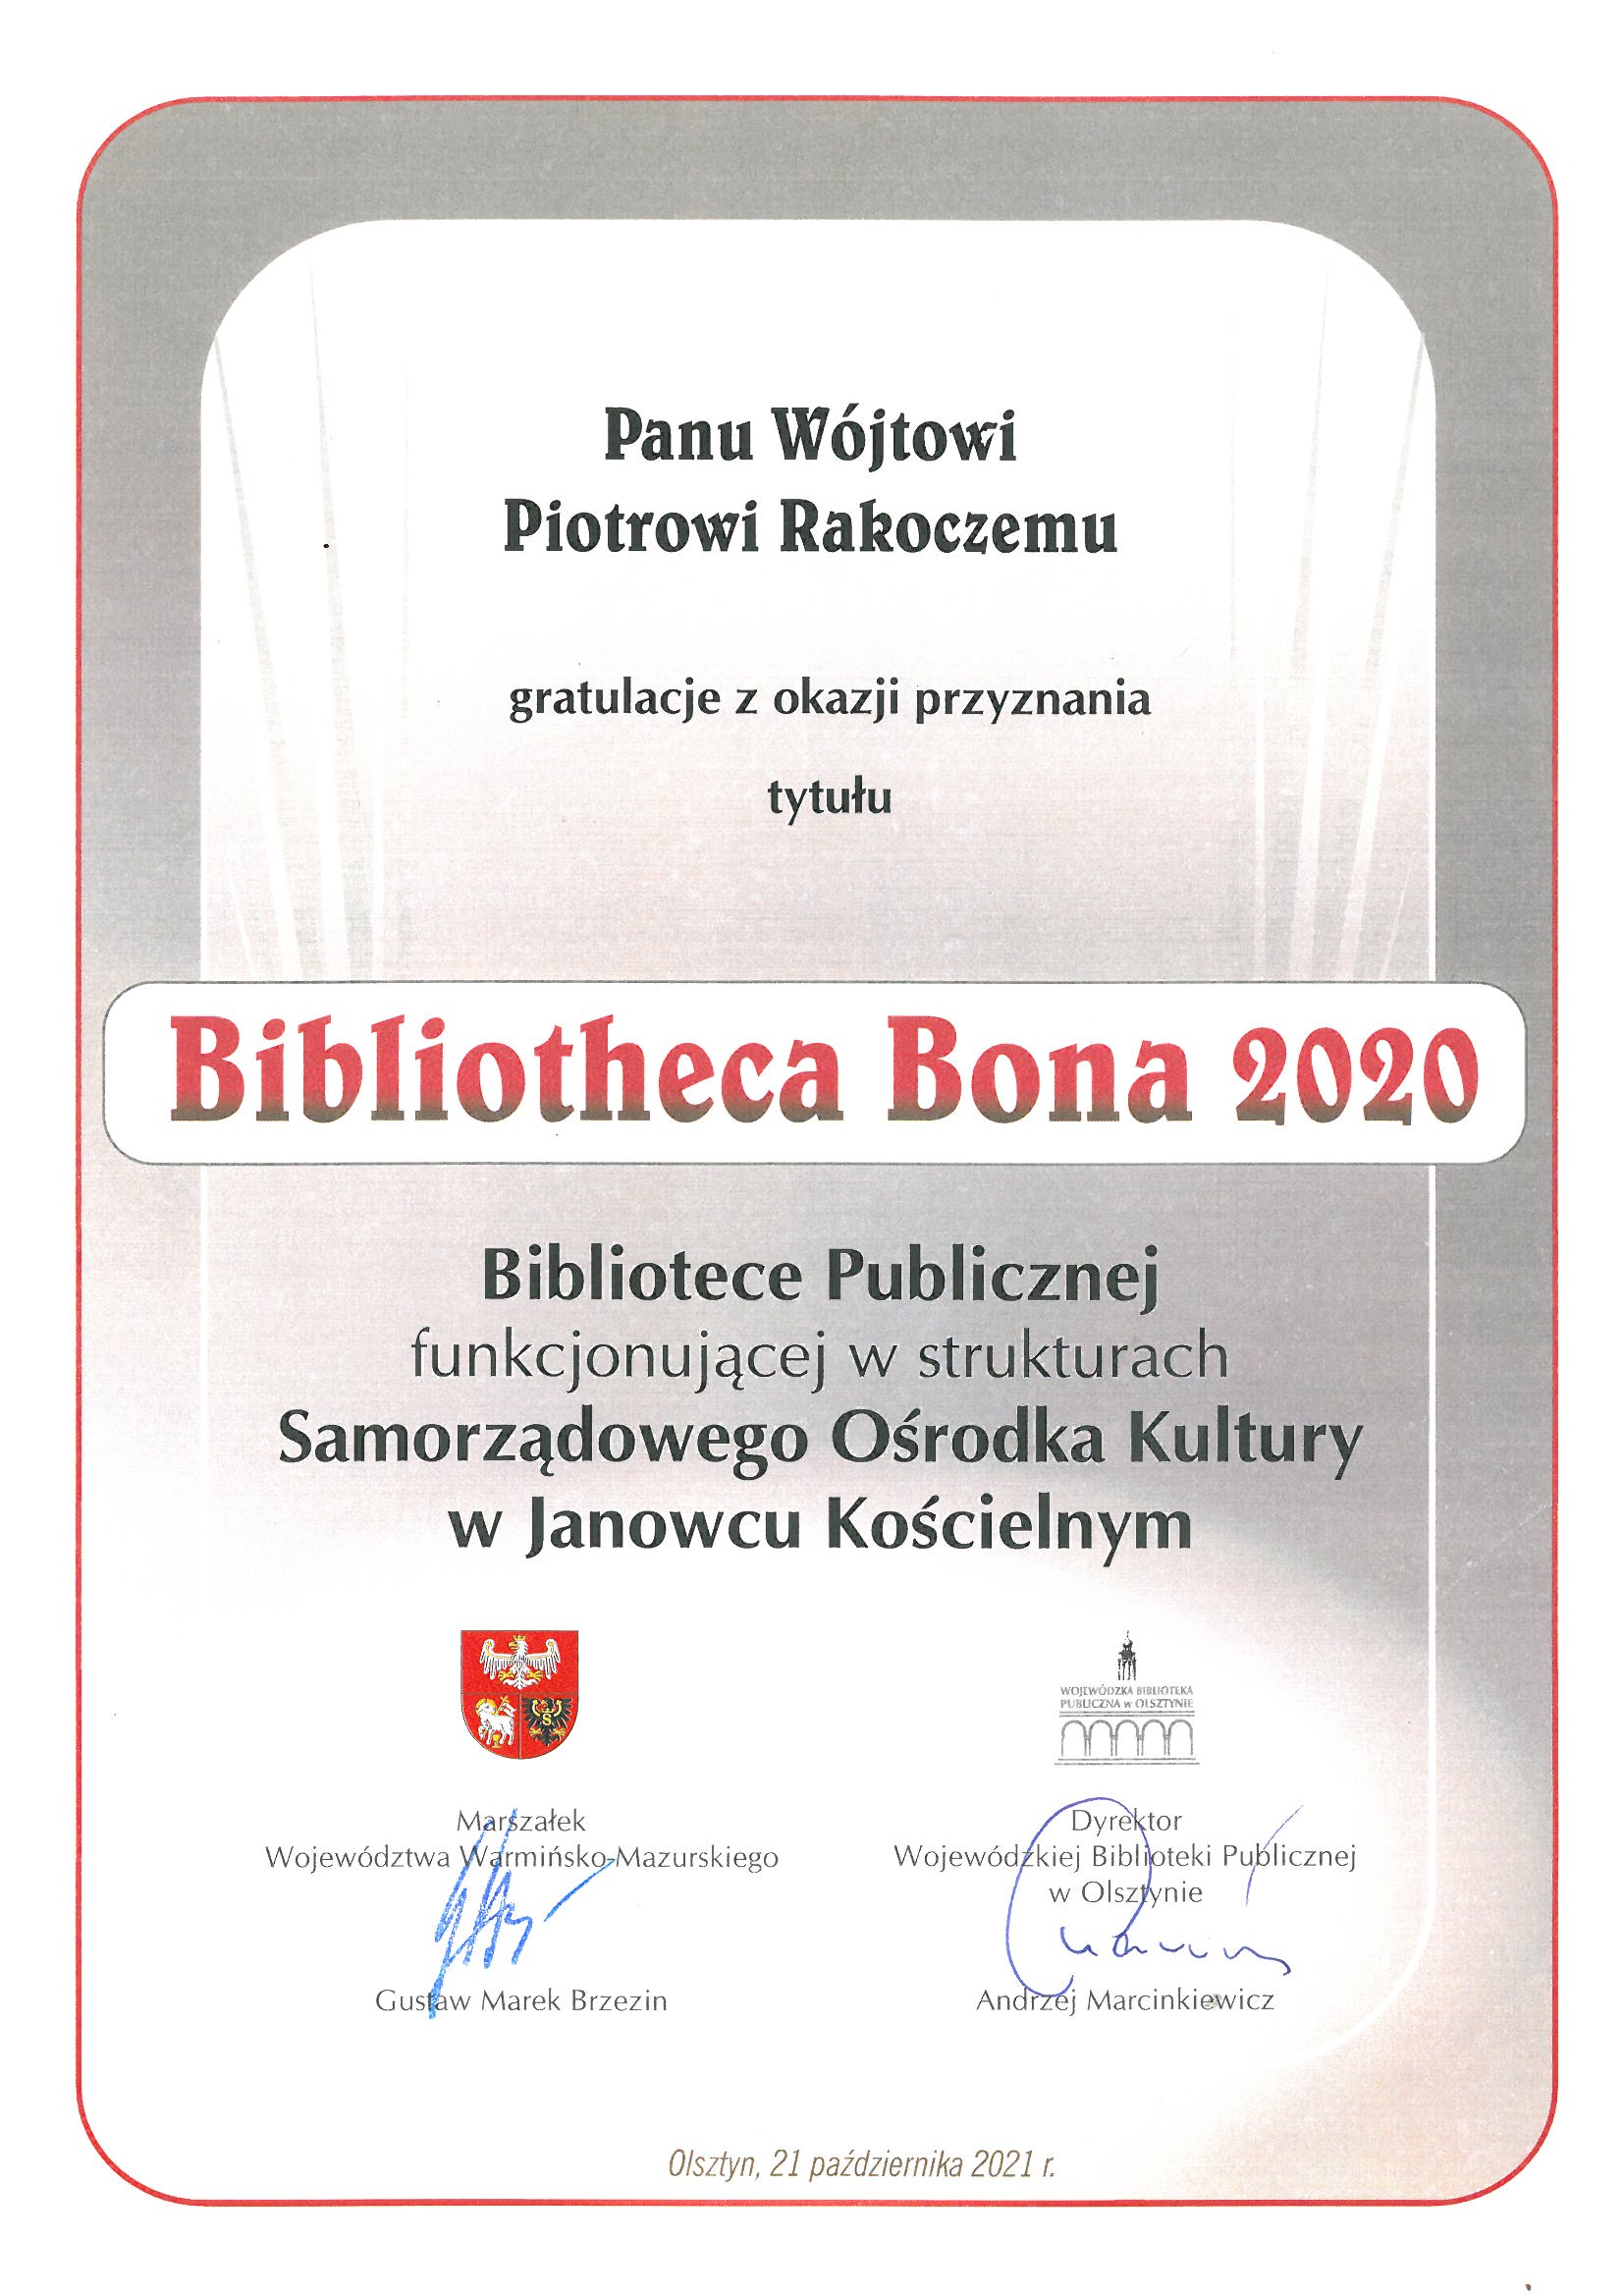 Bibliotheca Bona 2020